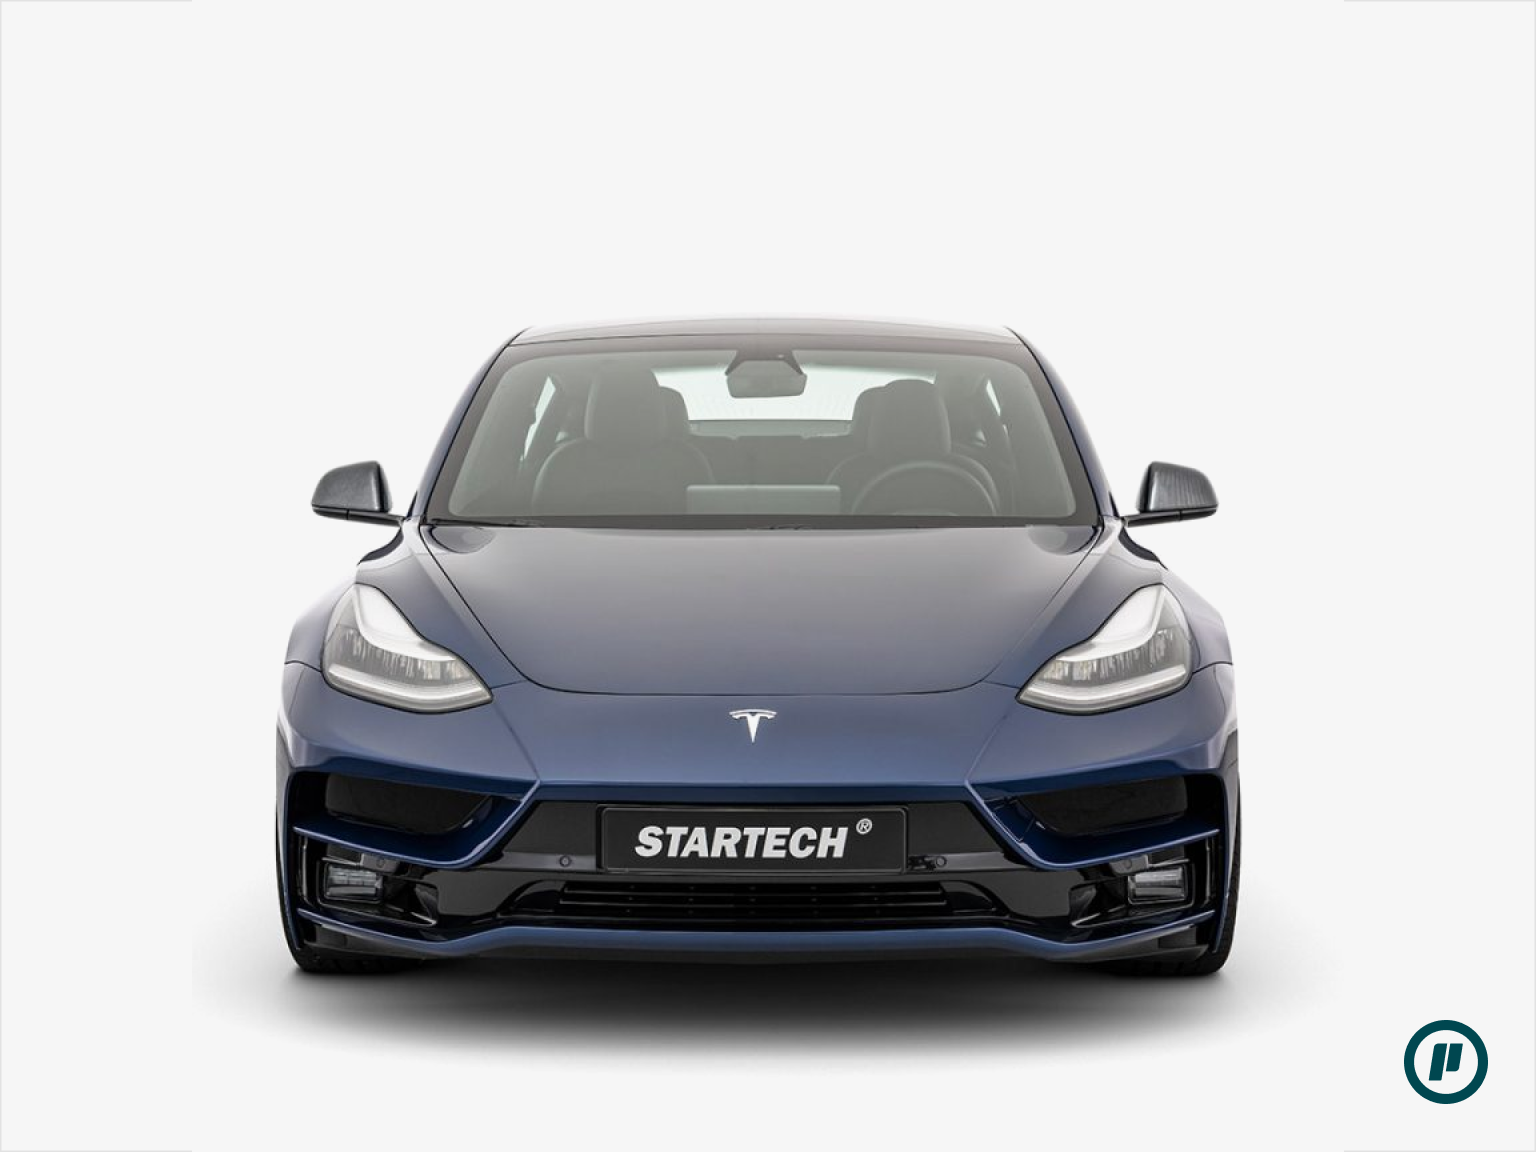 Startech Front Bumper for Tesla Model 3 (2017+)